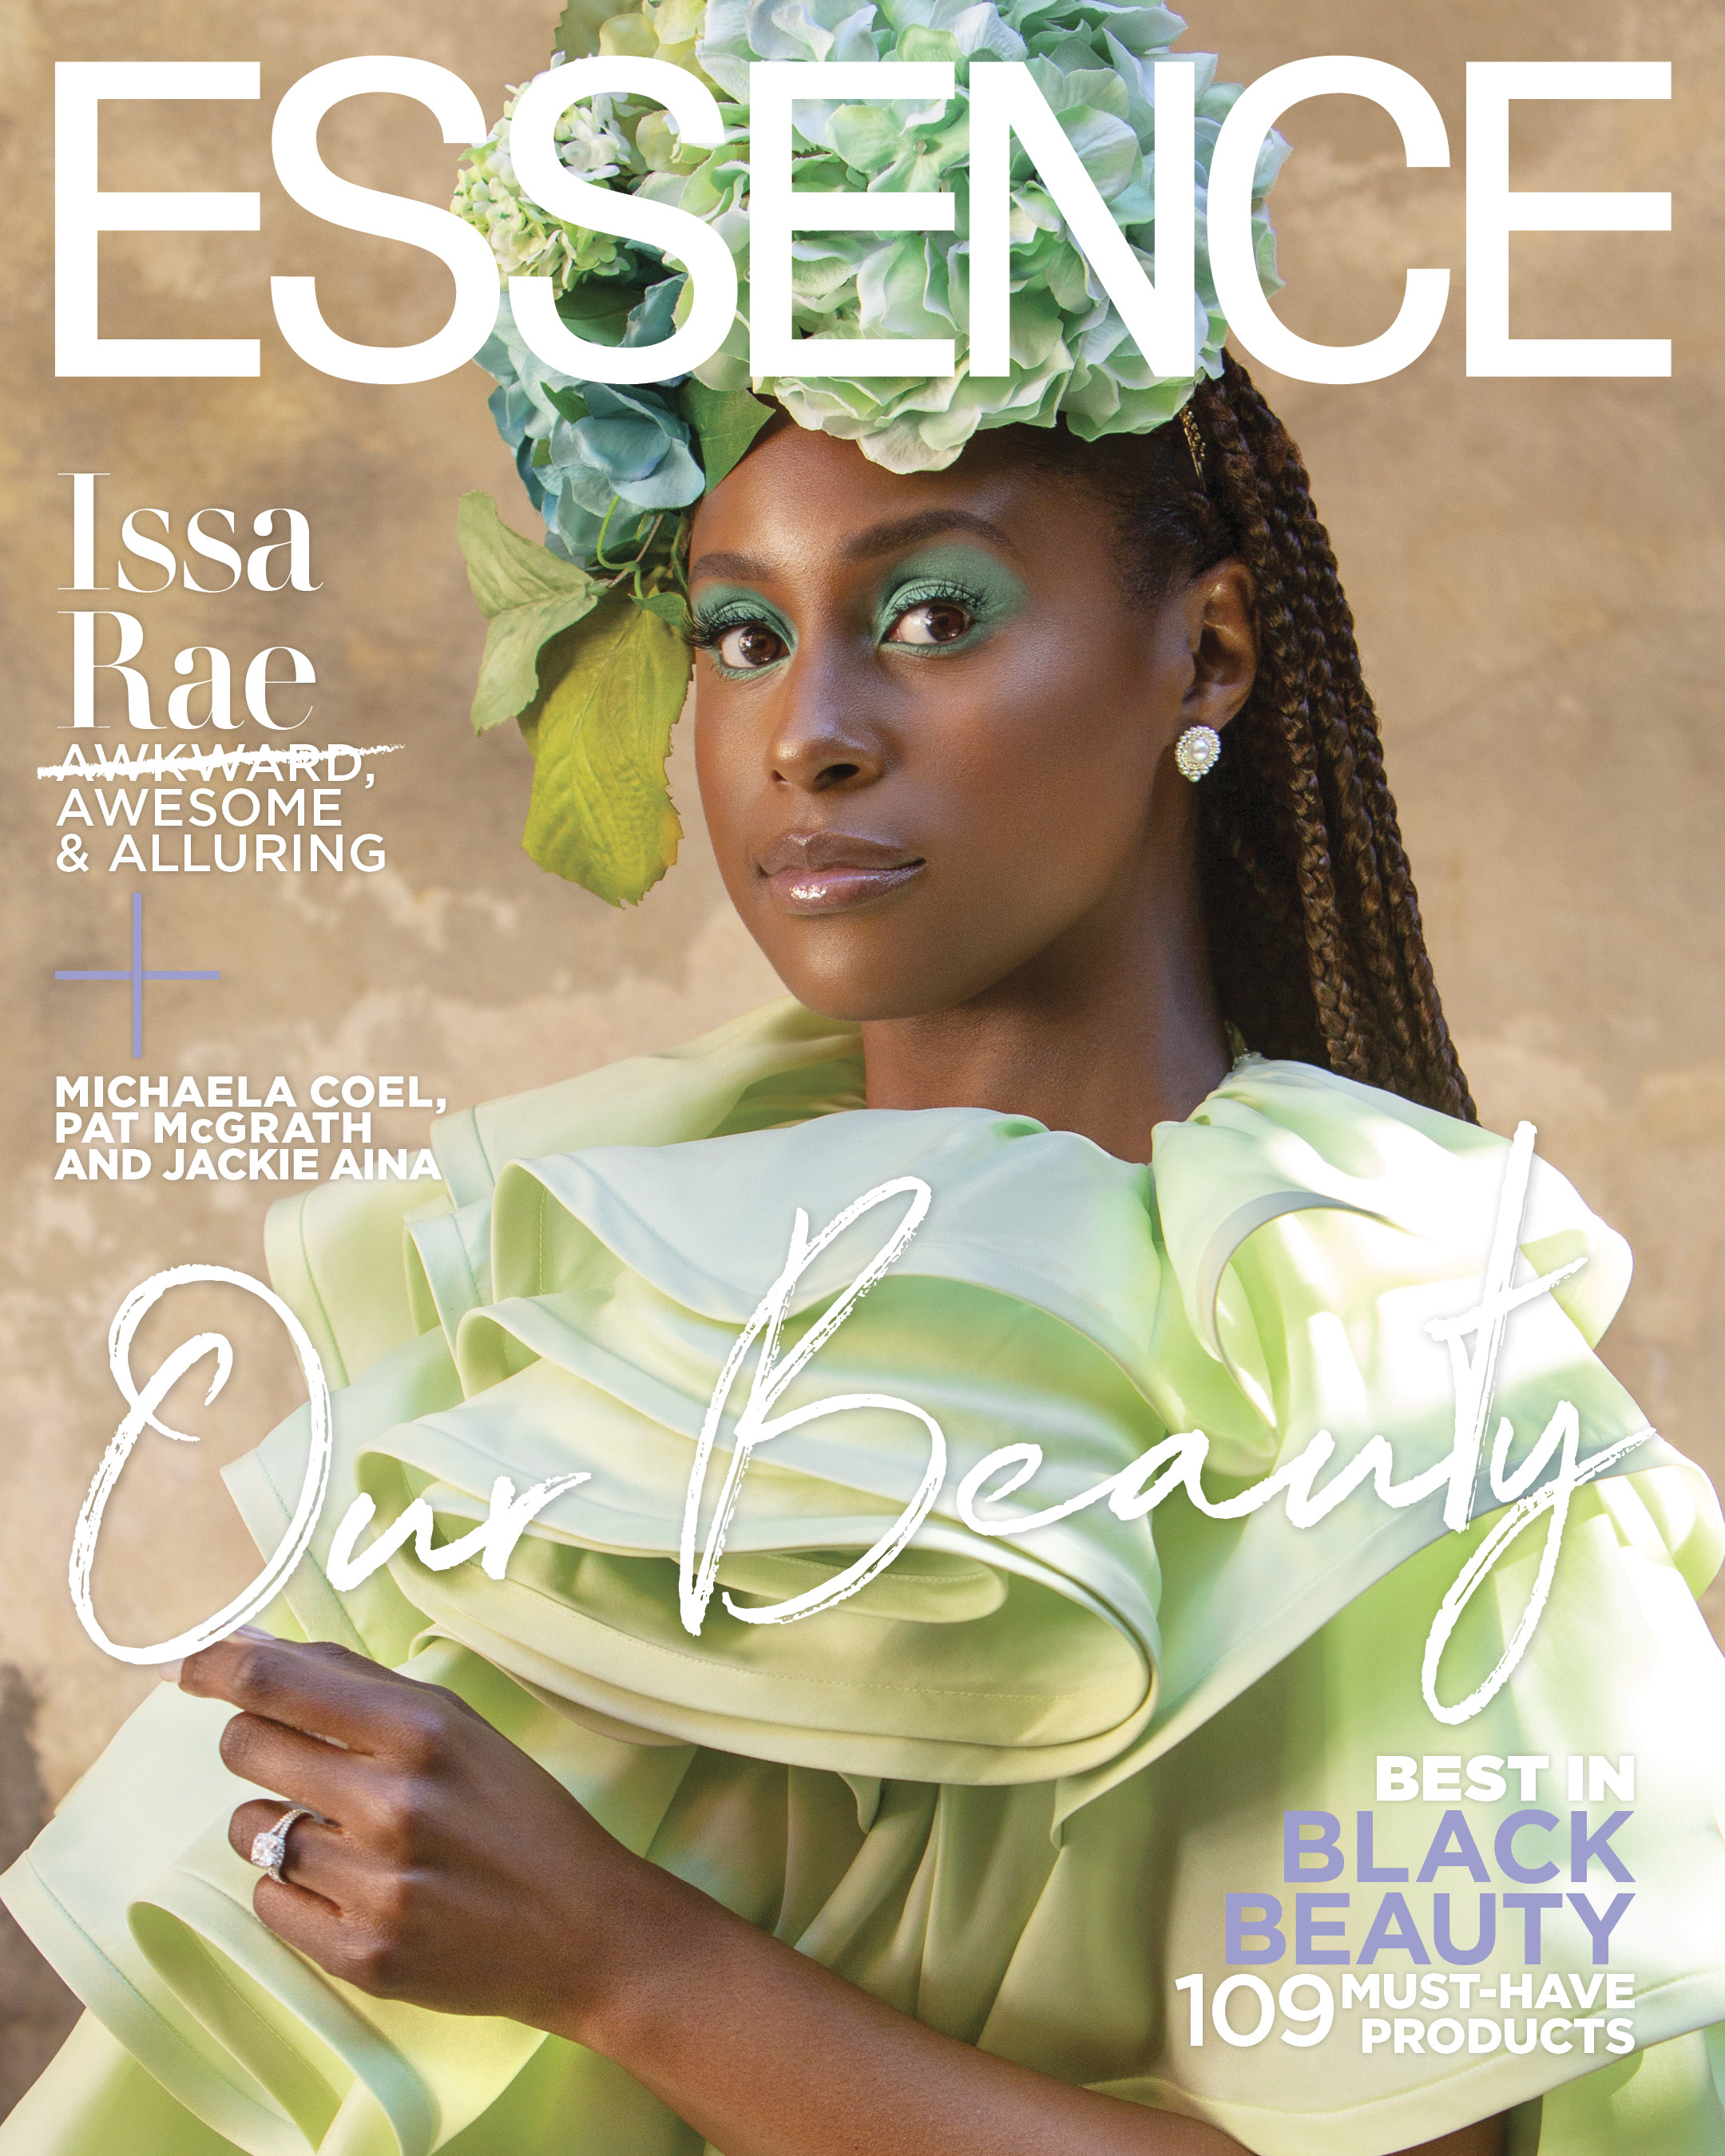 Issa Rae Essence Cover